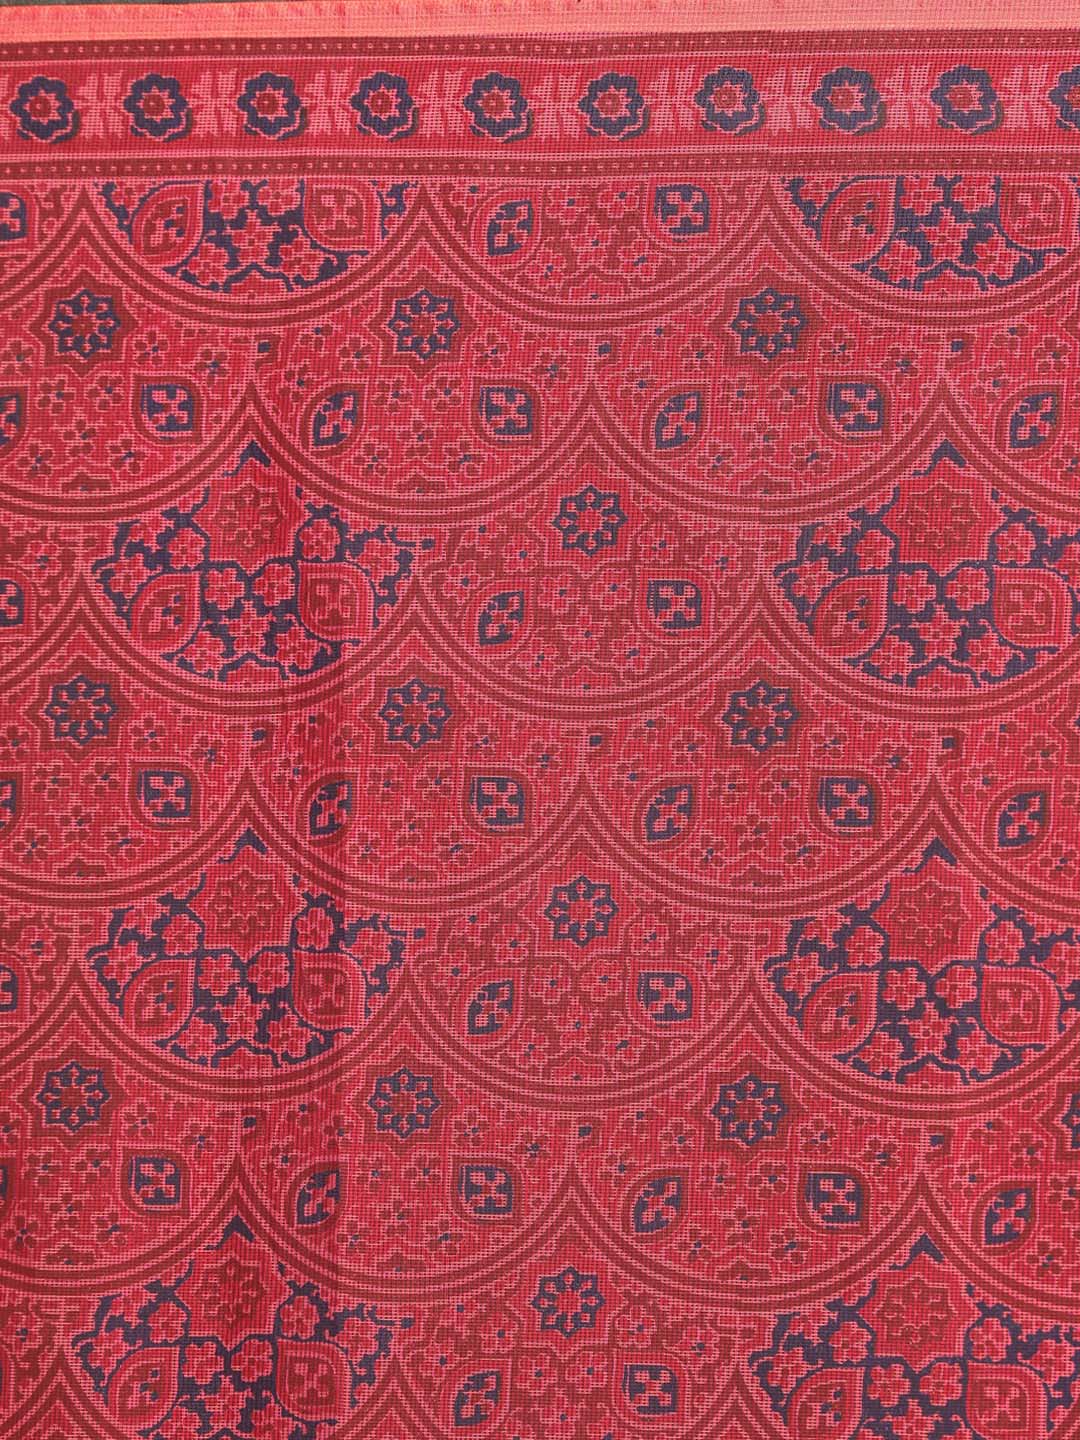 Indethnic Printed Super Net Saree in Magenta - Saree Detail View